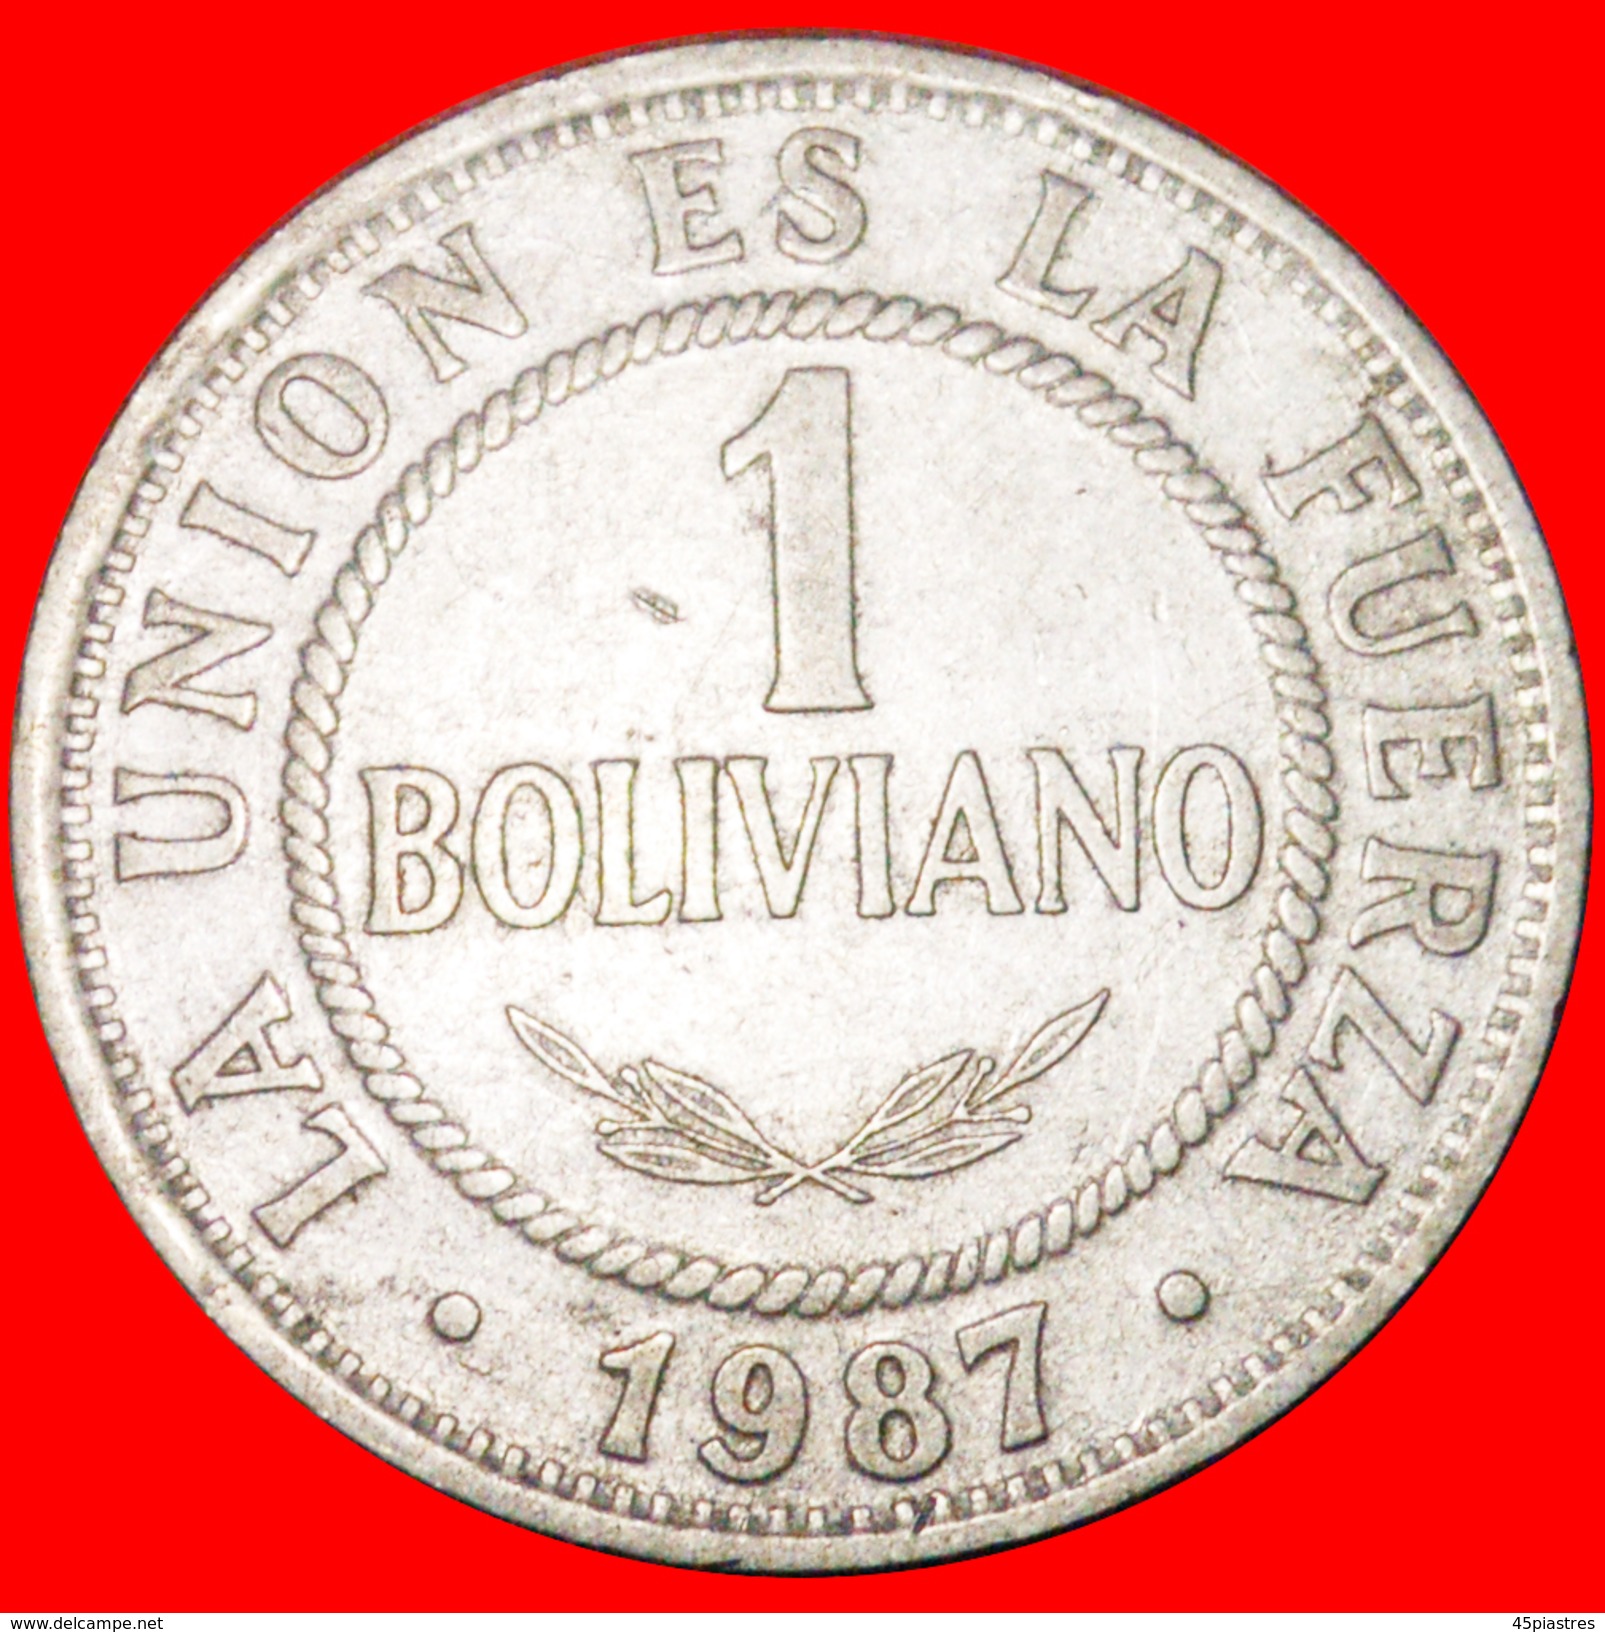 § SUN: BOLIVIA &#x2605; 1 BOLIVIANO 1987! LOW START&#x2605; NO RESERVE! - Bolivie